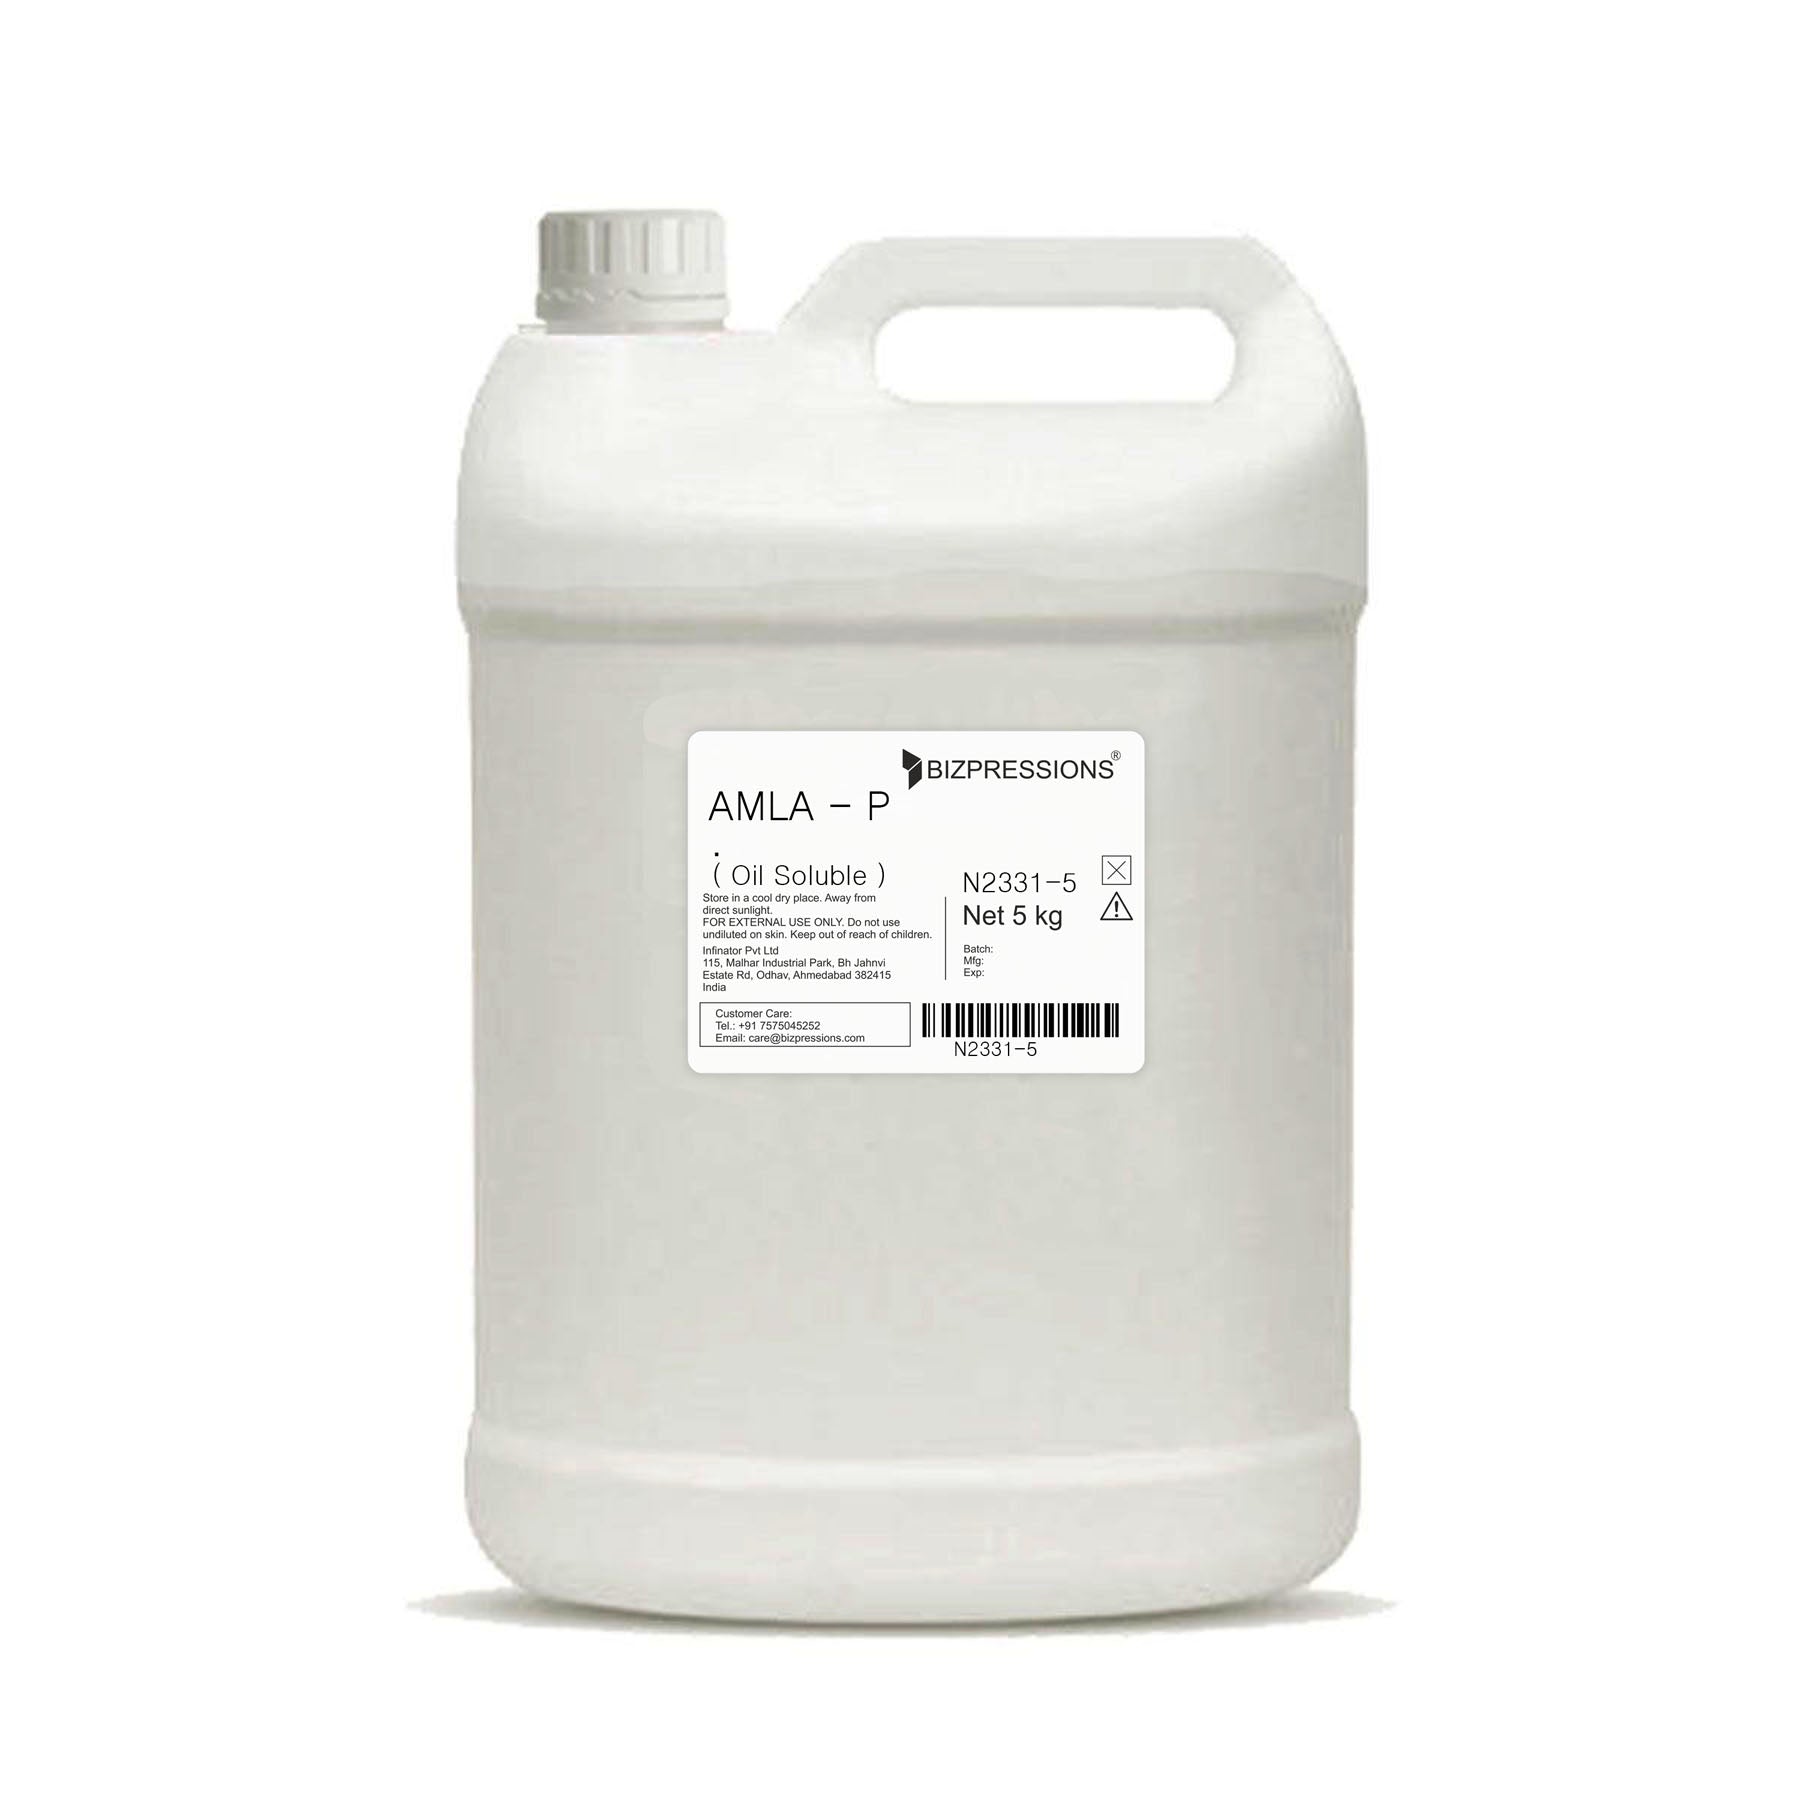 AMLA - P - Fragrance ( Oil Soluble ) - 5 kg